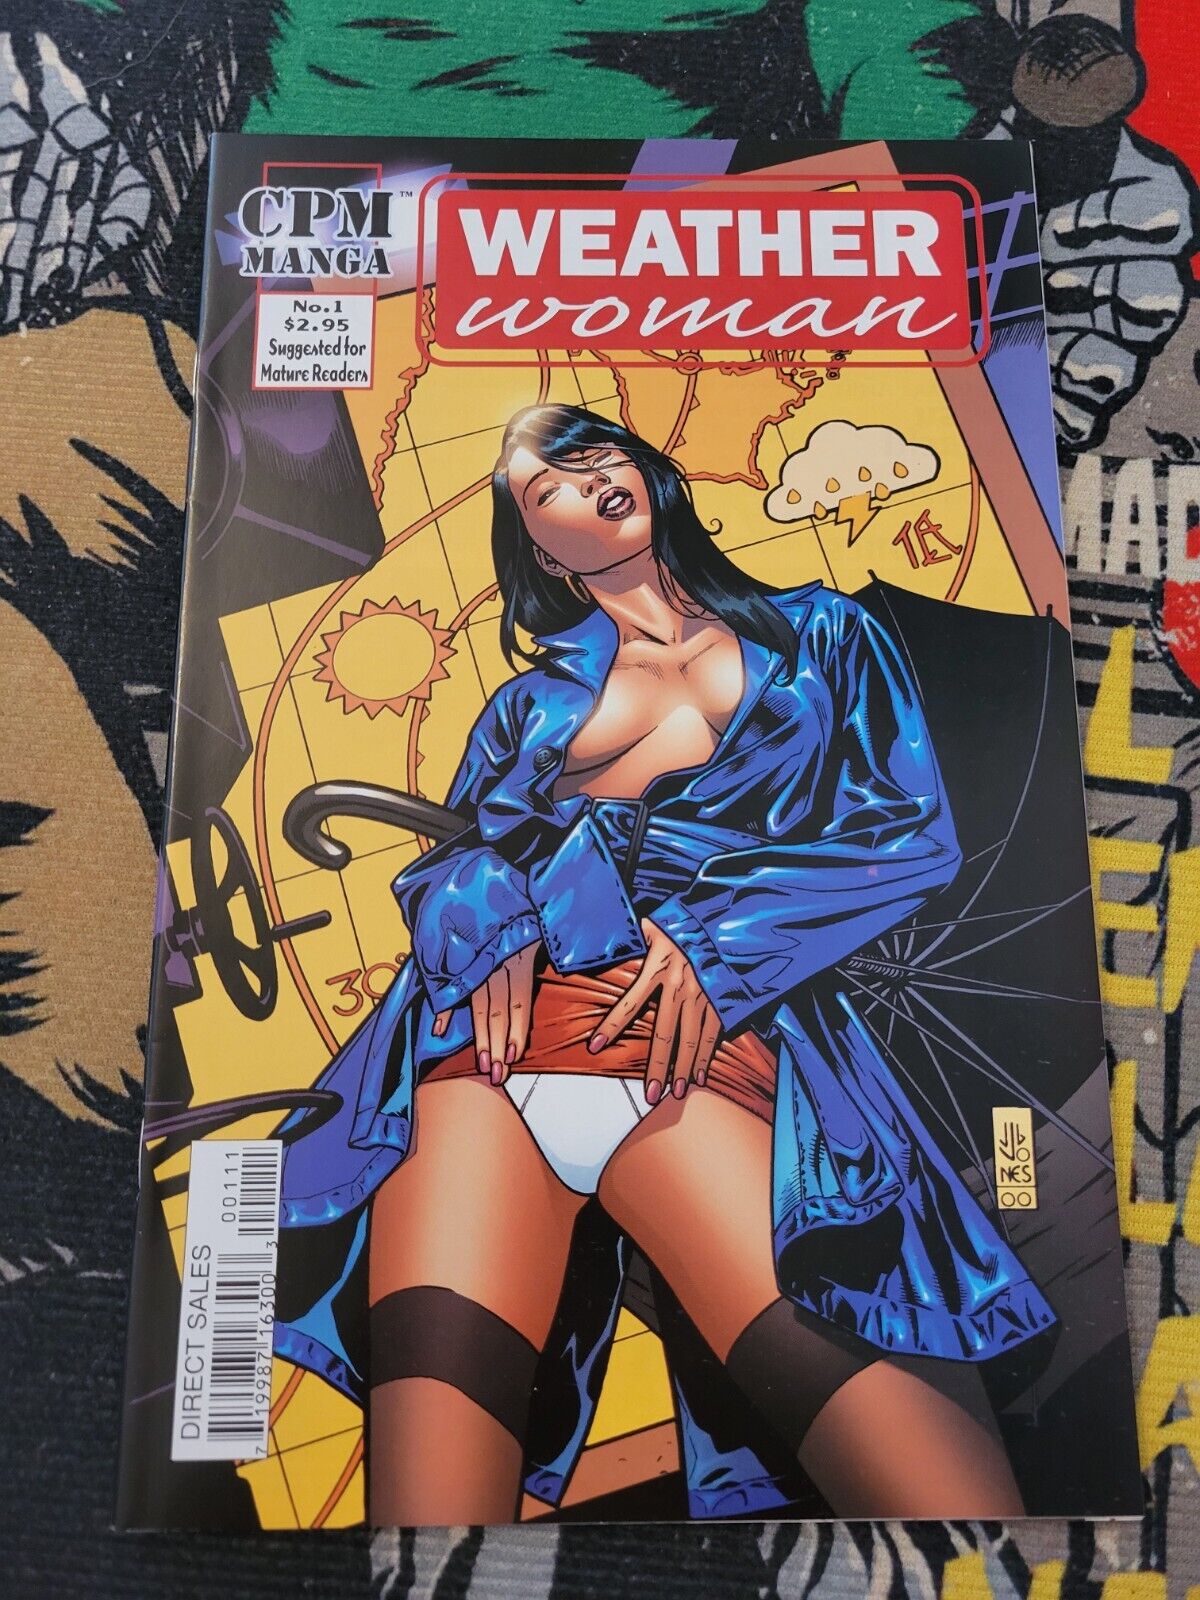 Weather Woman #1 Cover B Vintage CPM Manga Comics Rare Mature Readers NM+